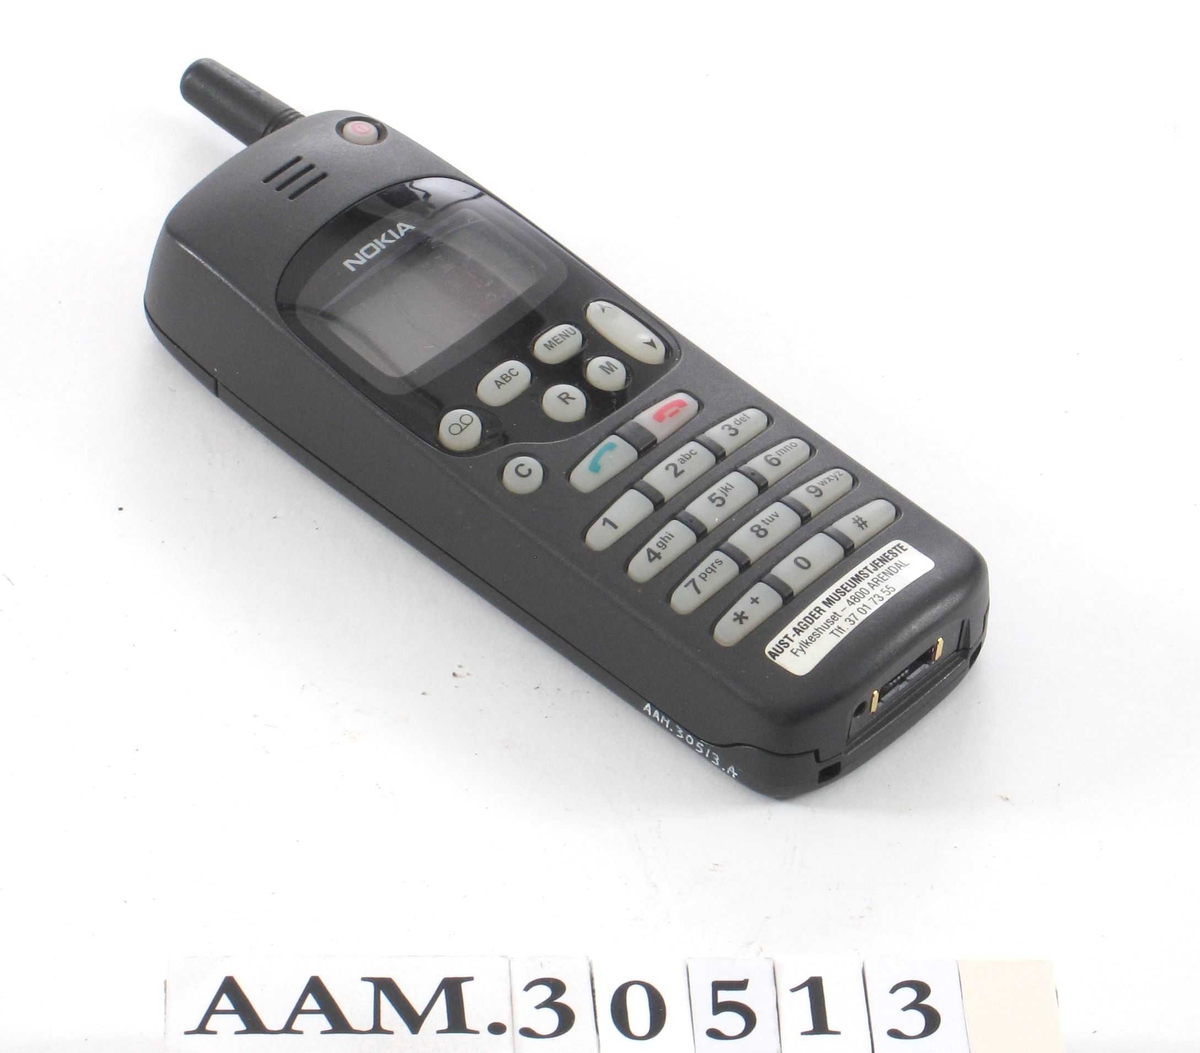 Rektangulær, med liten antenne. 
Telefonen (AAM.30513.A) ligger i eske (AAM.30513.B), sammen med tilhørende bruksanvisninger og brev vedrørende abonnement. Den første mobiltelefonen til Aust-Agder museumstjeneste.